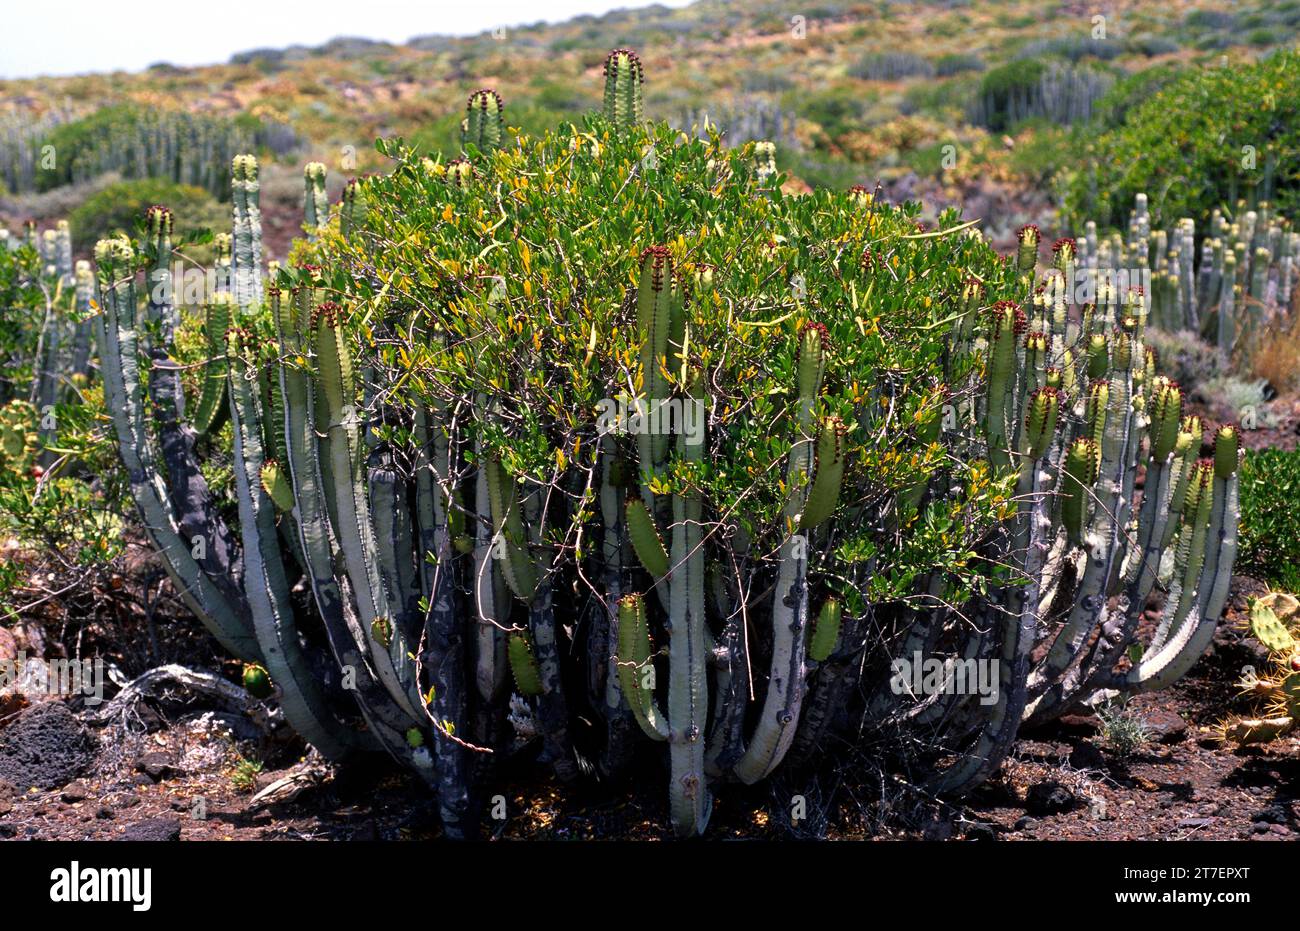 Cornicabra or cornical (Periploca laevigata or Periploca angustifolia) is a shrub native to Canary Islands, southeastern Spain and northern Africa. Sp Stock Photo